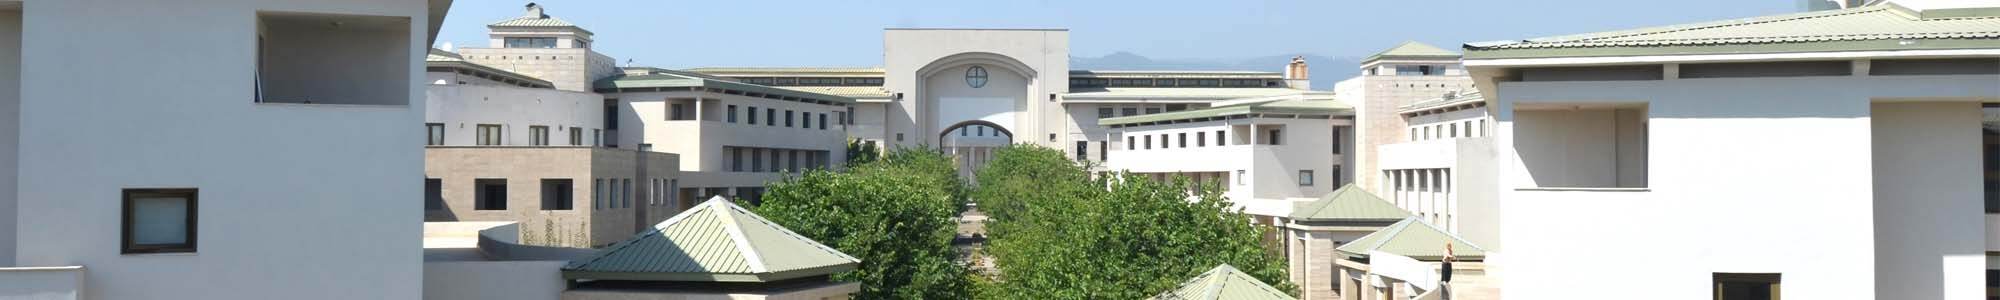 Mersin Üniversitesi Mühendislik Fakültesi